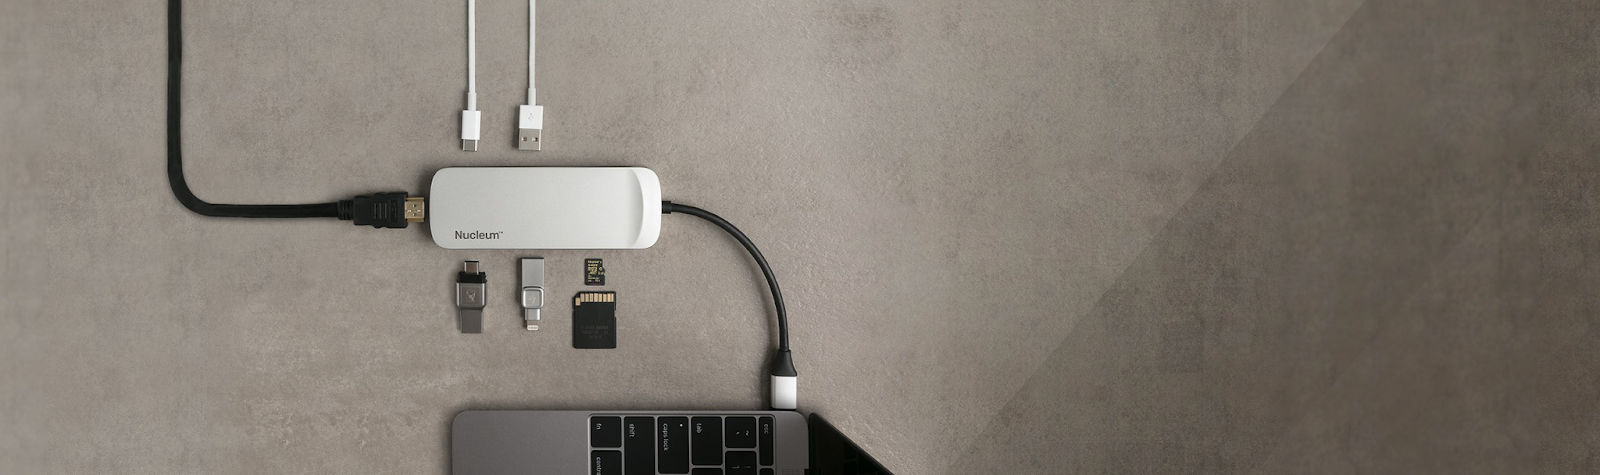 USB Хаб KINGSTON Nucleum 7-in-1 USB-C кабель + USB 3.0, HDMI, SD, microSD, Power Pass through, Type-C ports